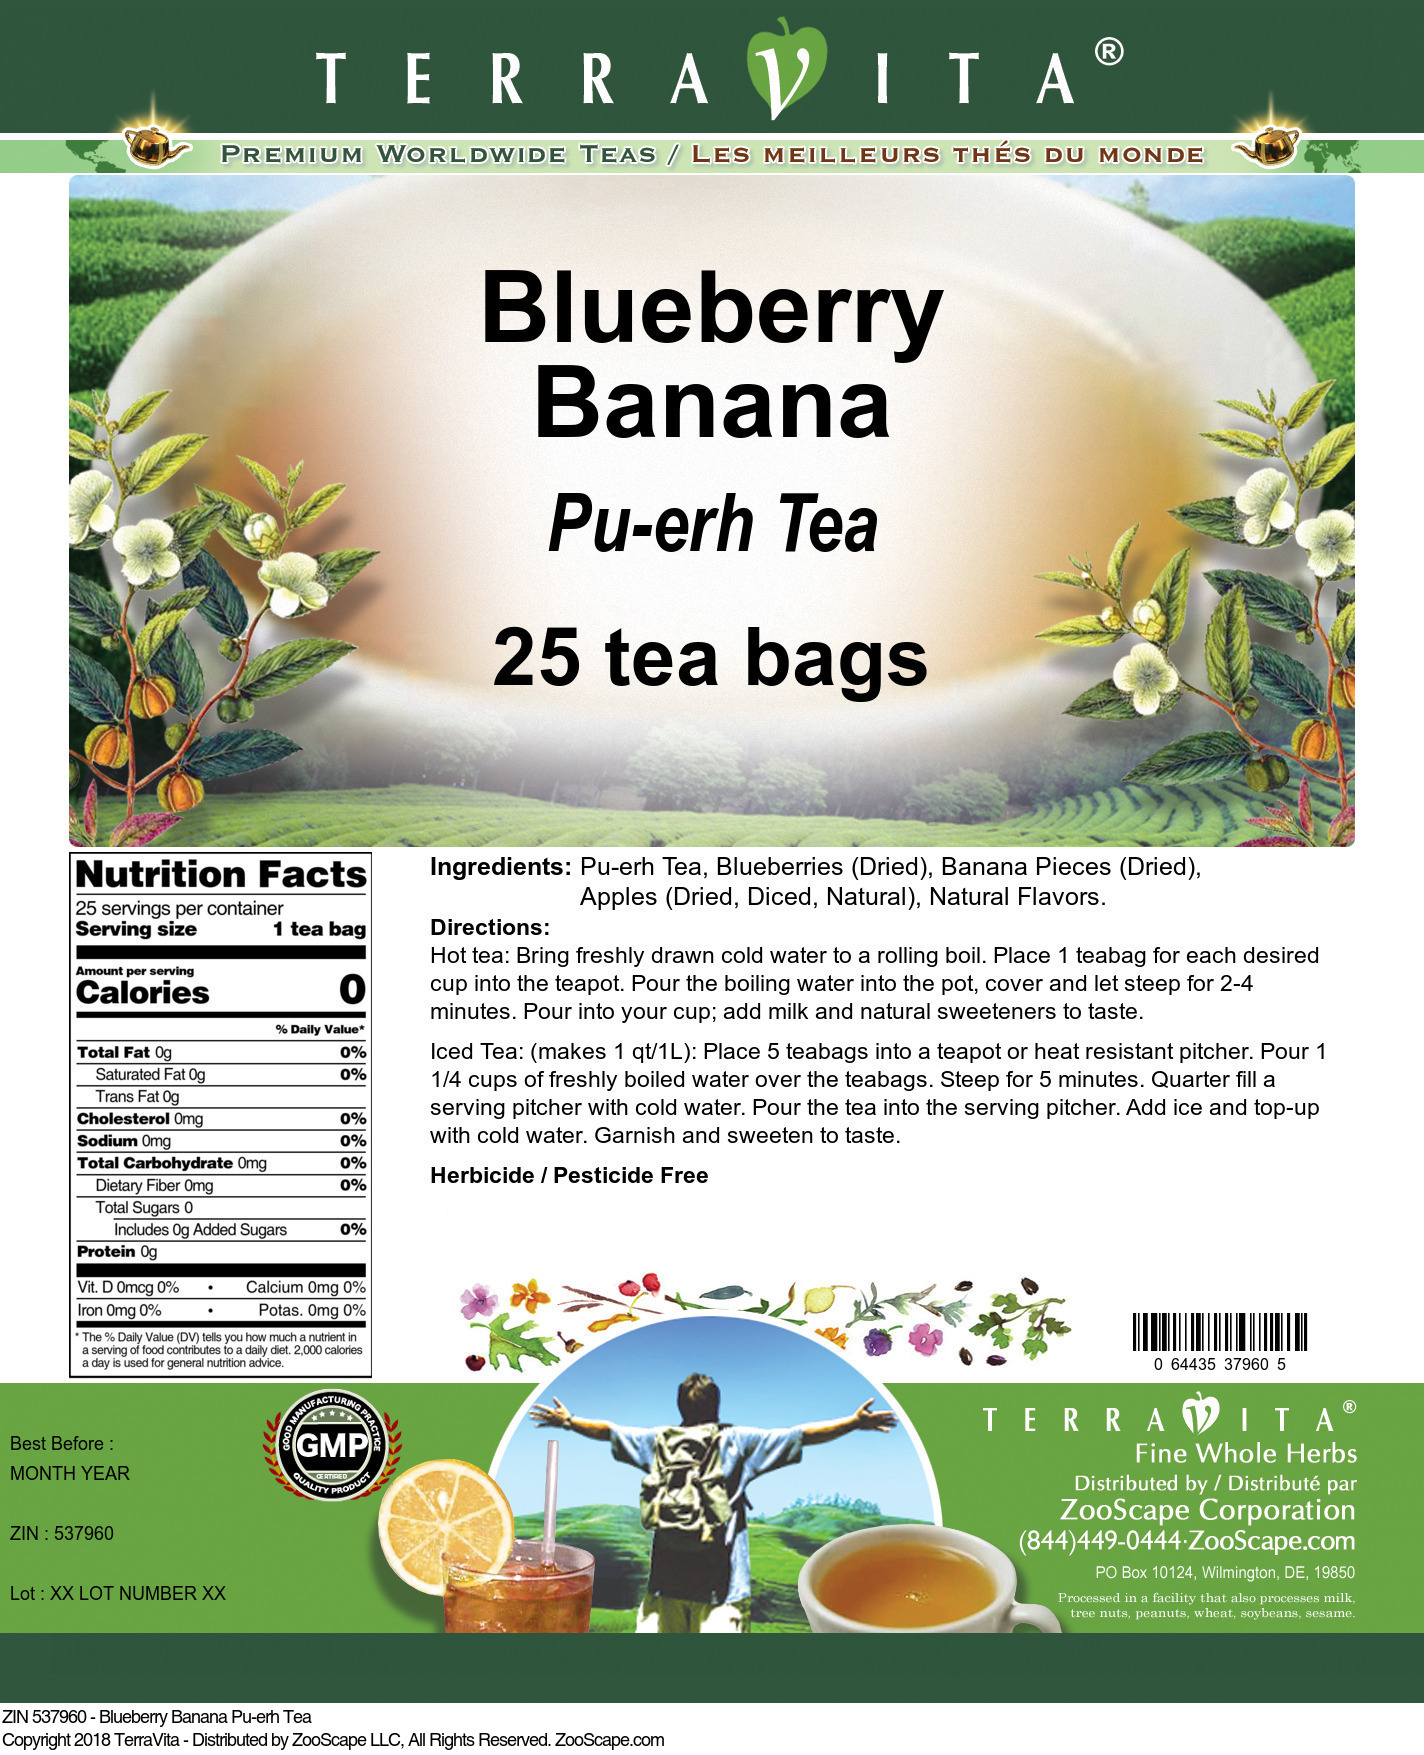 Blueberry Banana Pu-erh Tea - Label